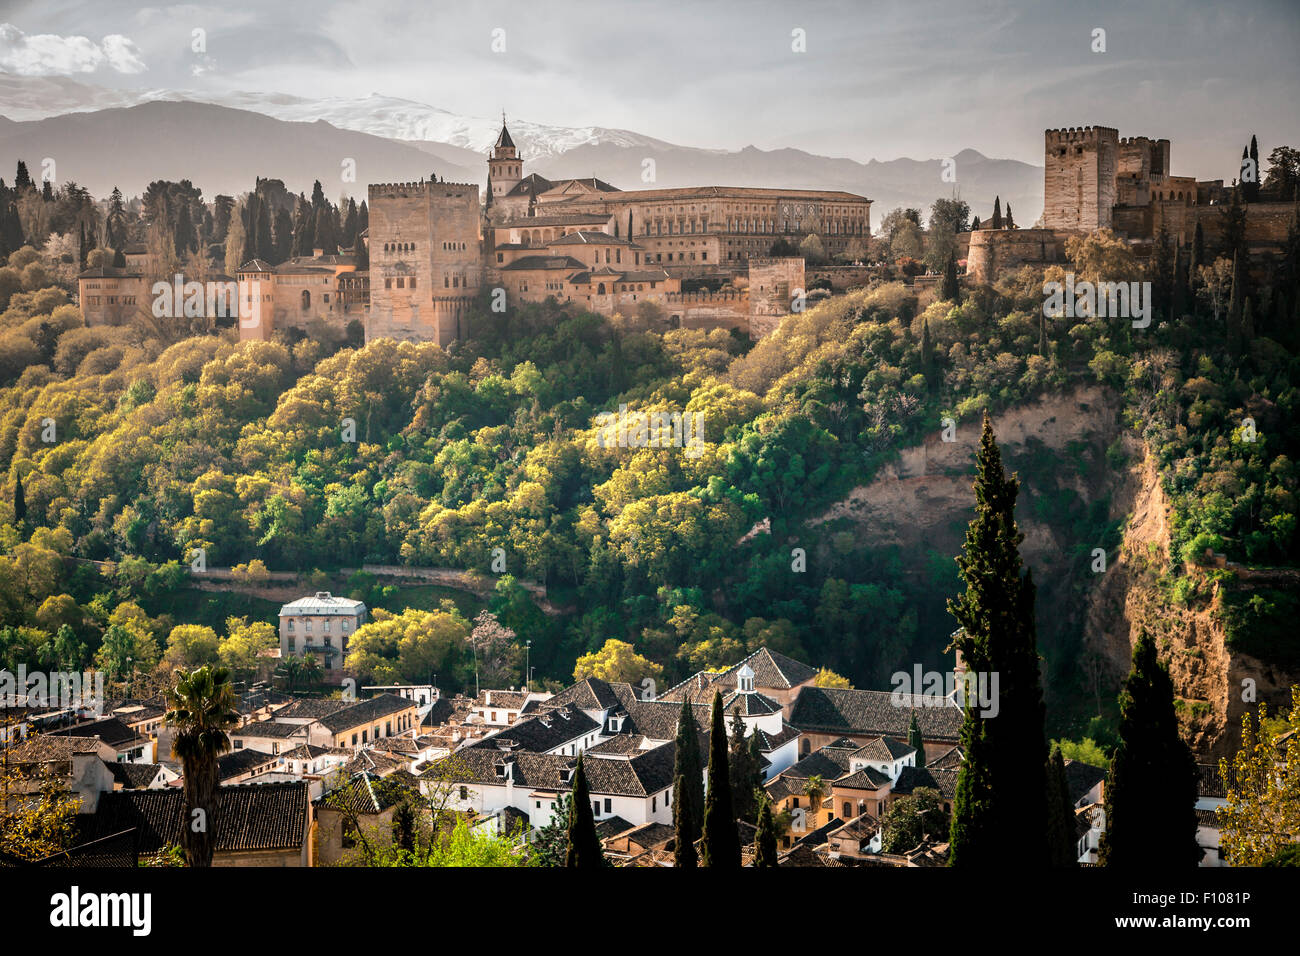 View of The Alhambra from Albaicin quarter, mirador de San Nicolas, Granada, Andalusia, Spain Stock Photo